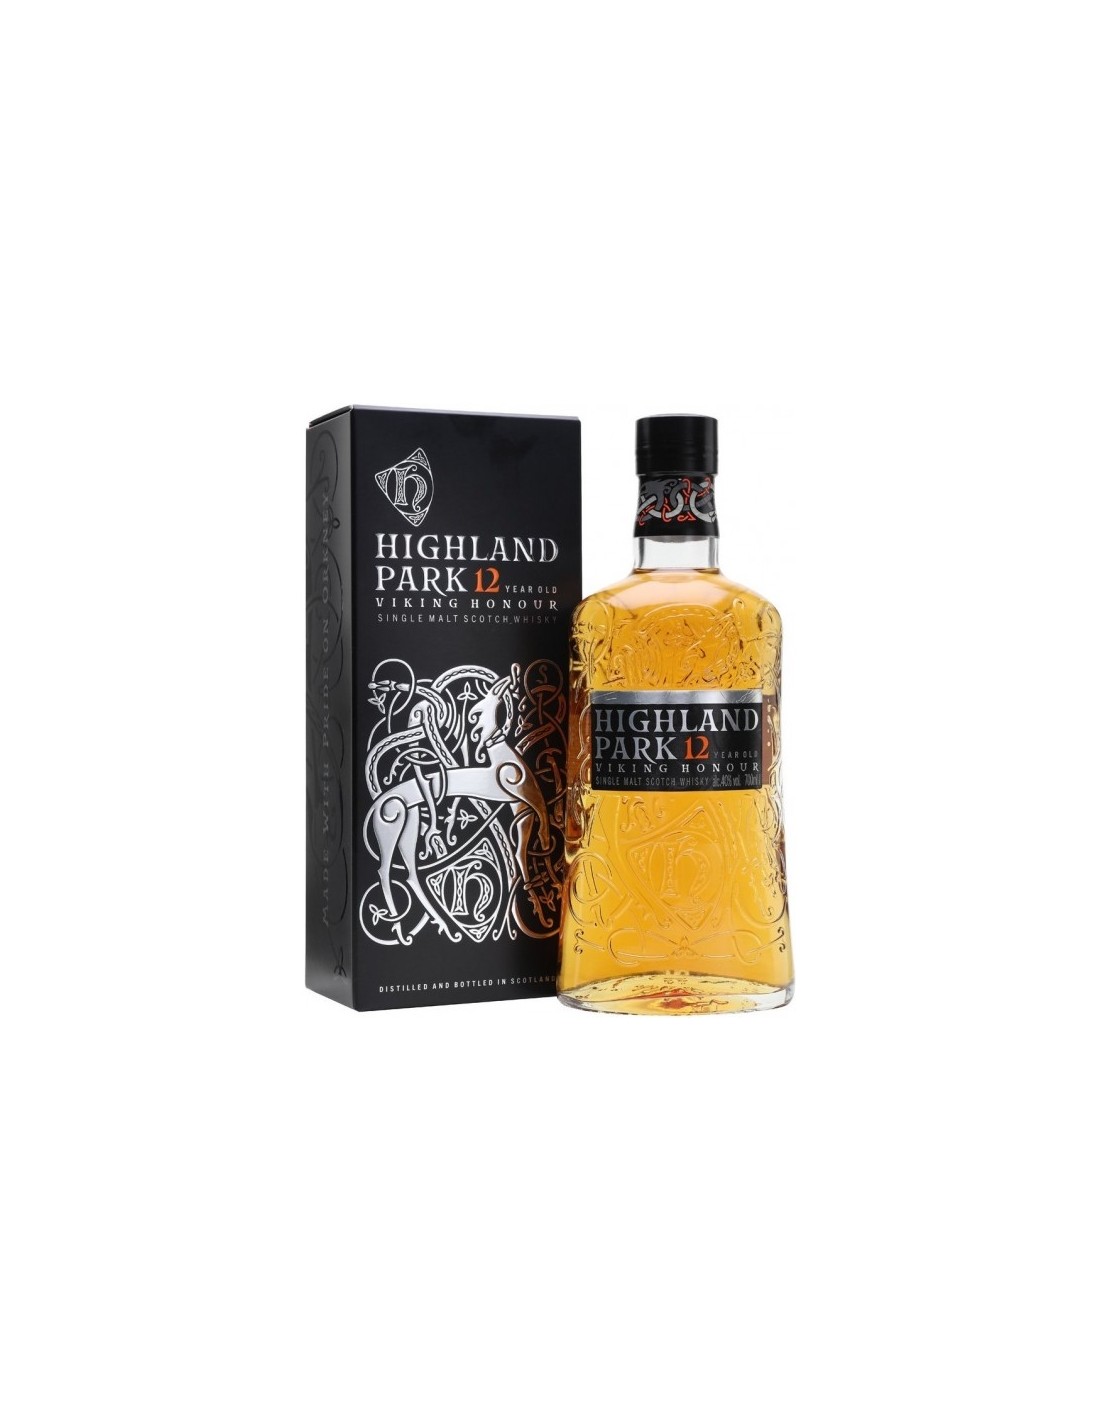 Whisky Highland Park, 0.7L, 12 ani, 40% alc., Scotia alcooldiscount.ro